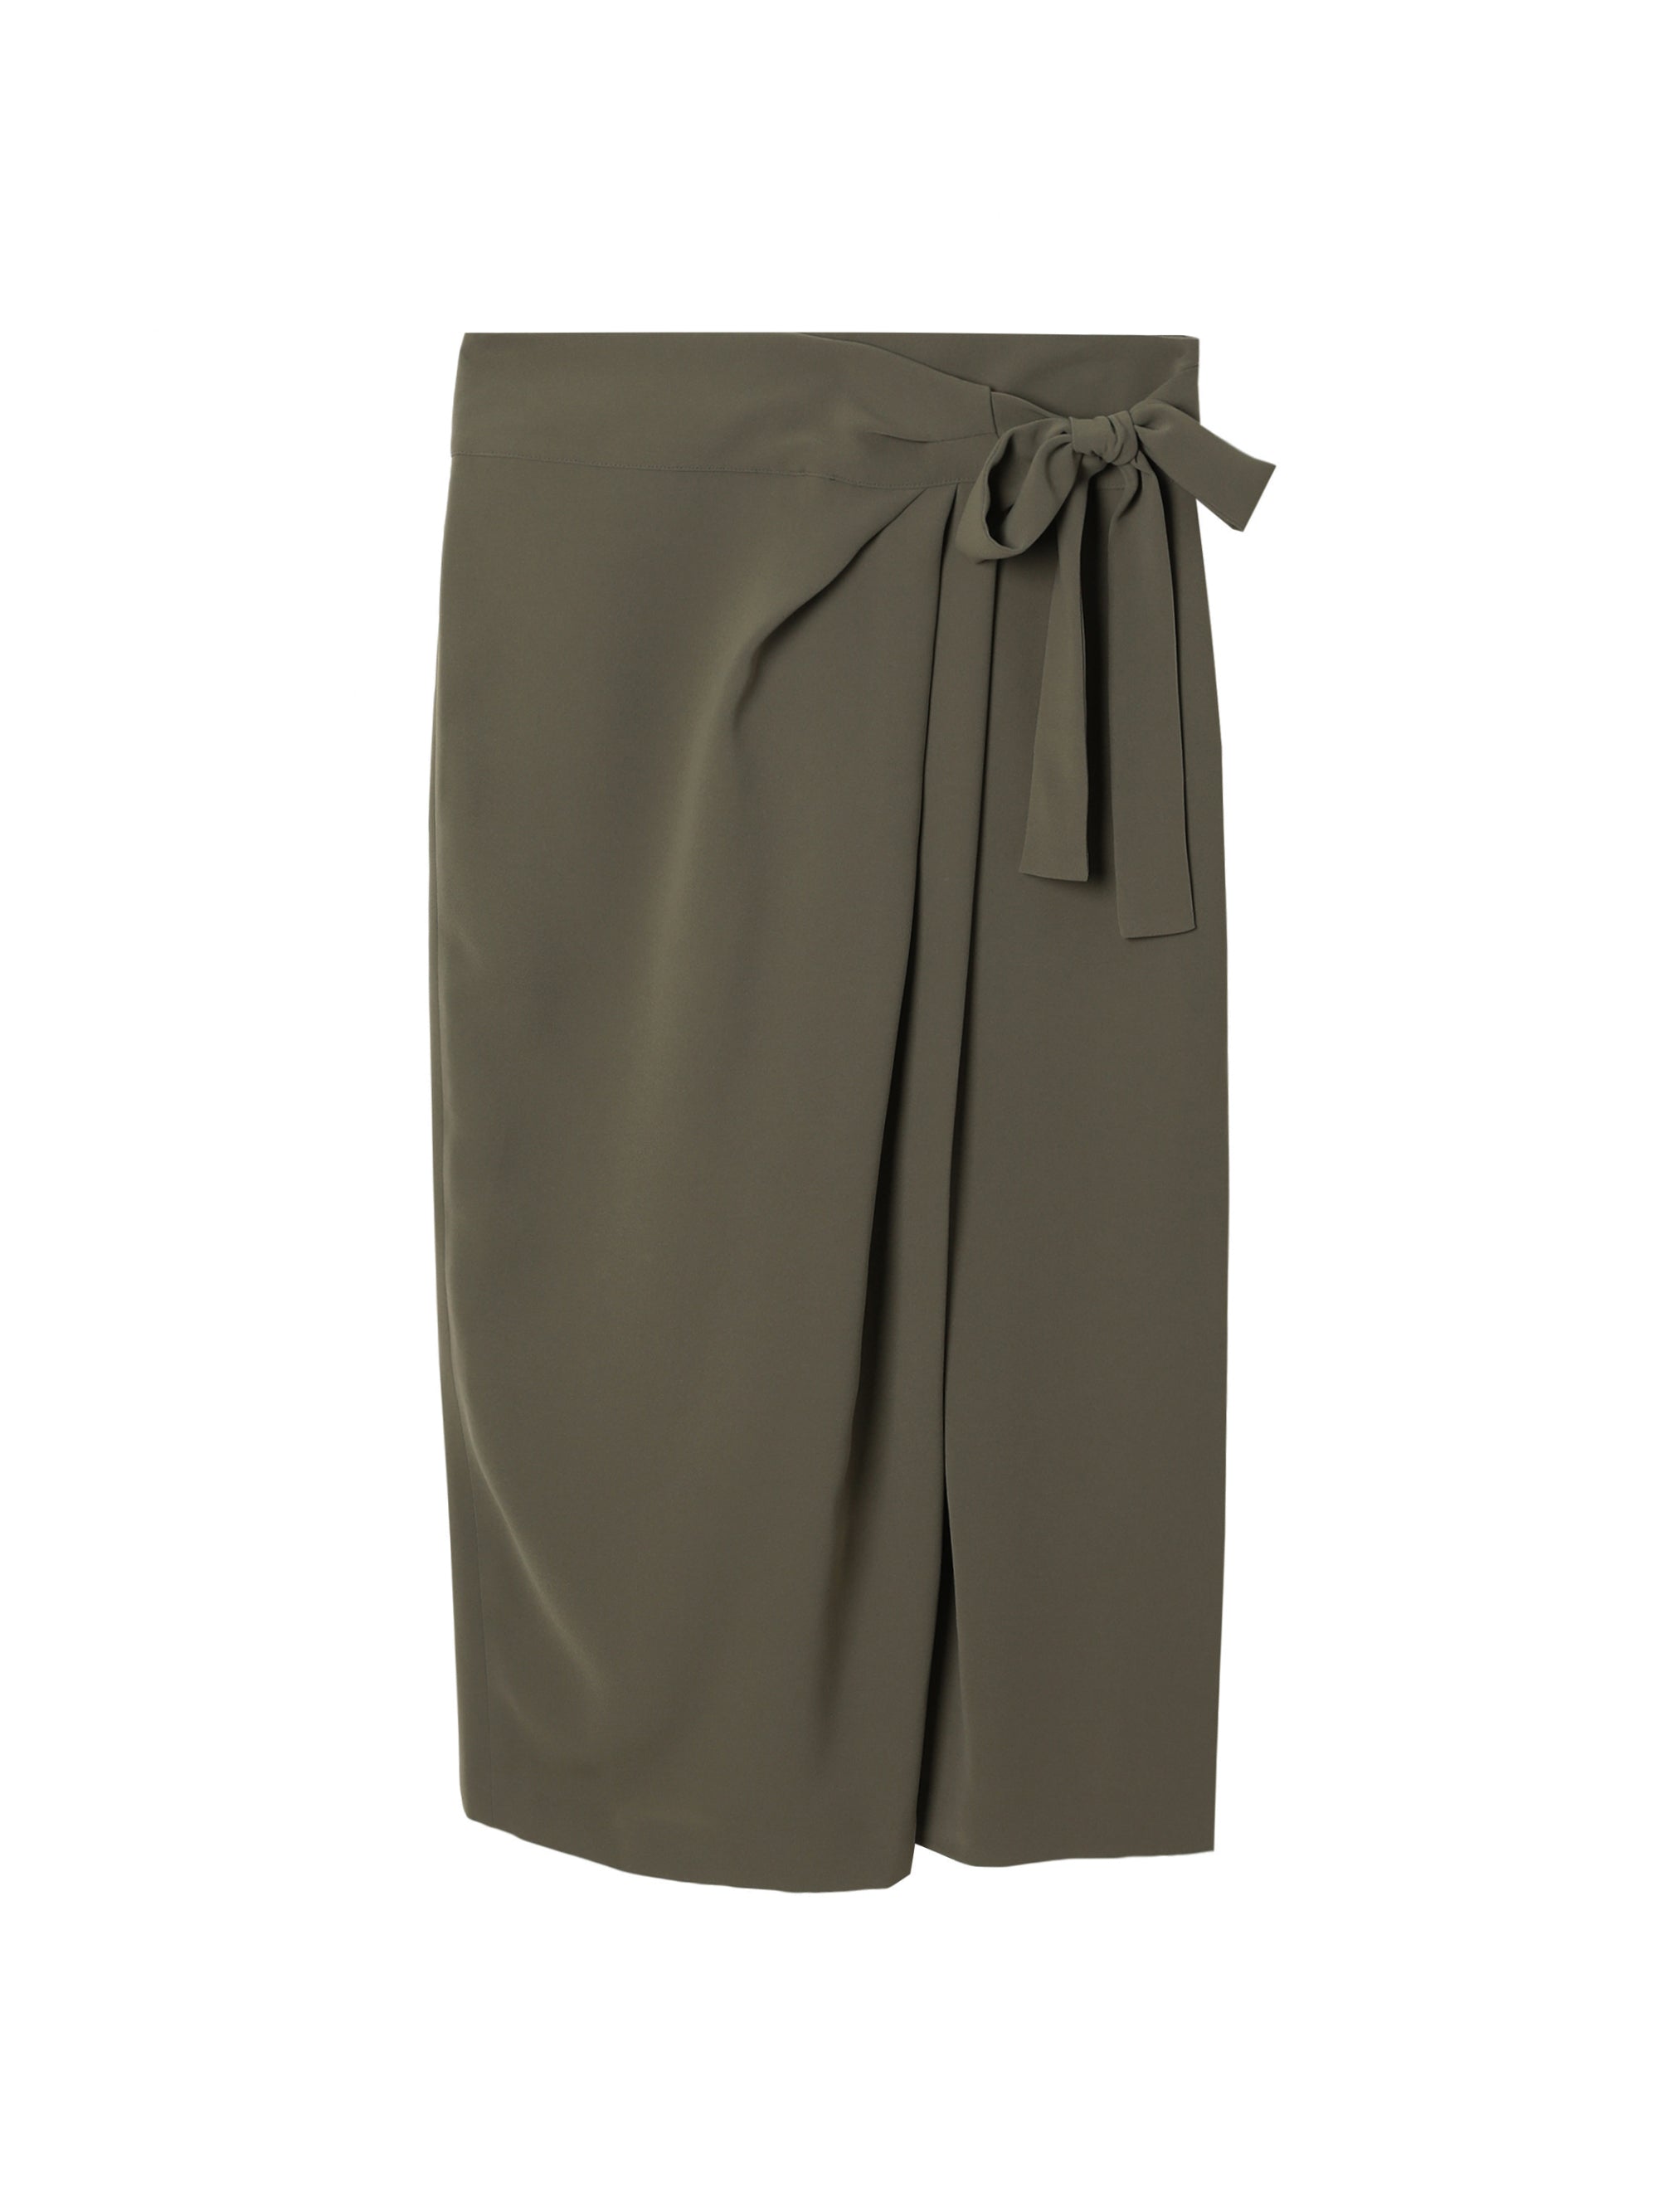 NORAH SUE Ribbon Tight Skirt